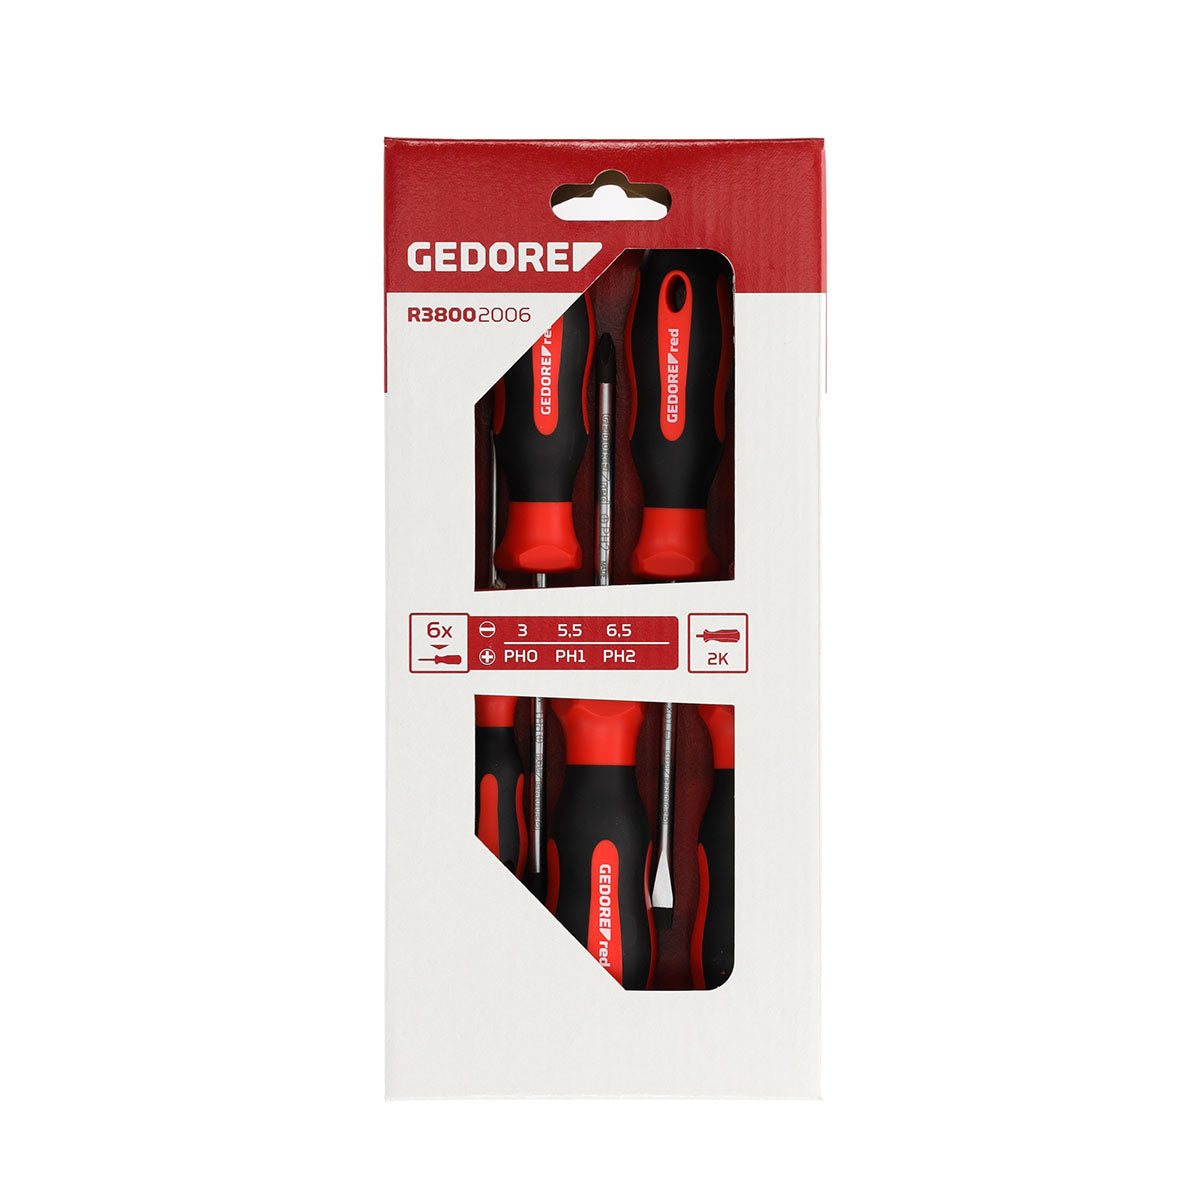 GEDORE red R38002006 - Set of 6 PH + Flat screwdrivers (3301270)